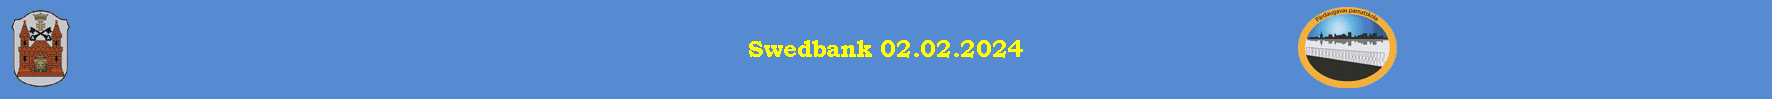 Swedbank 02.02.2024